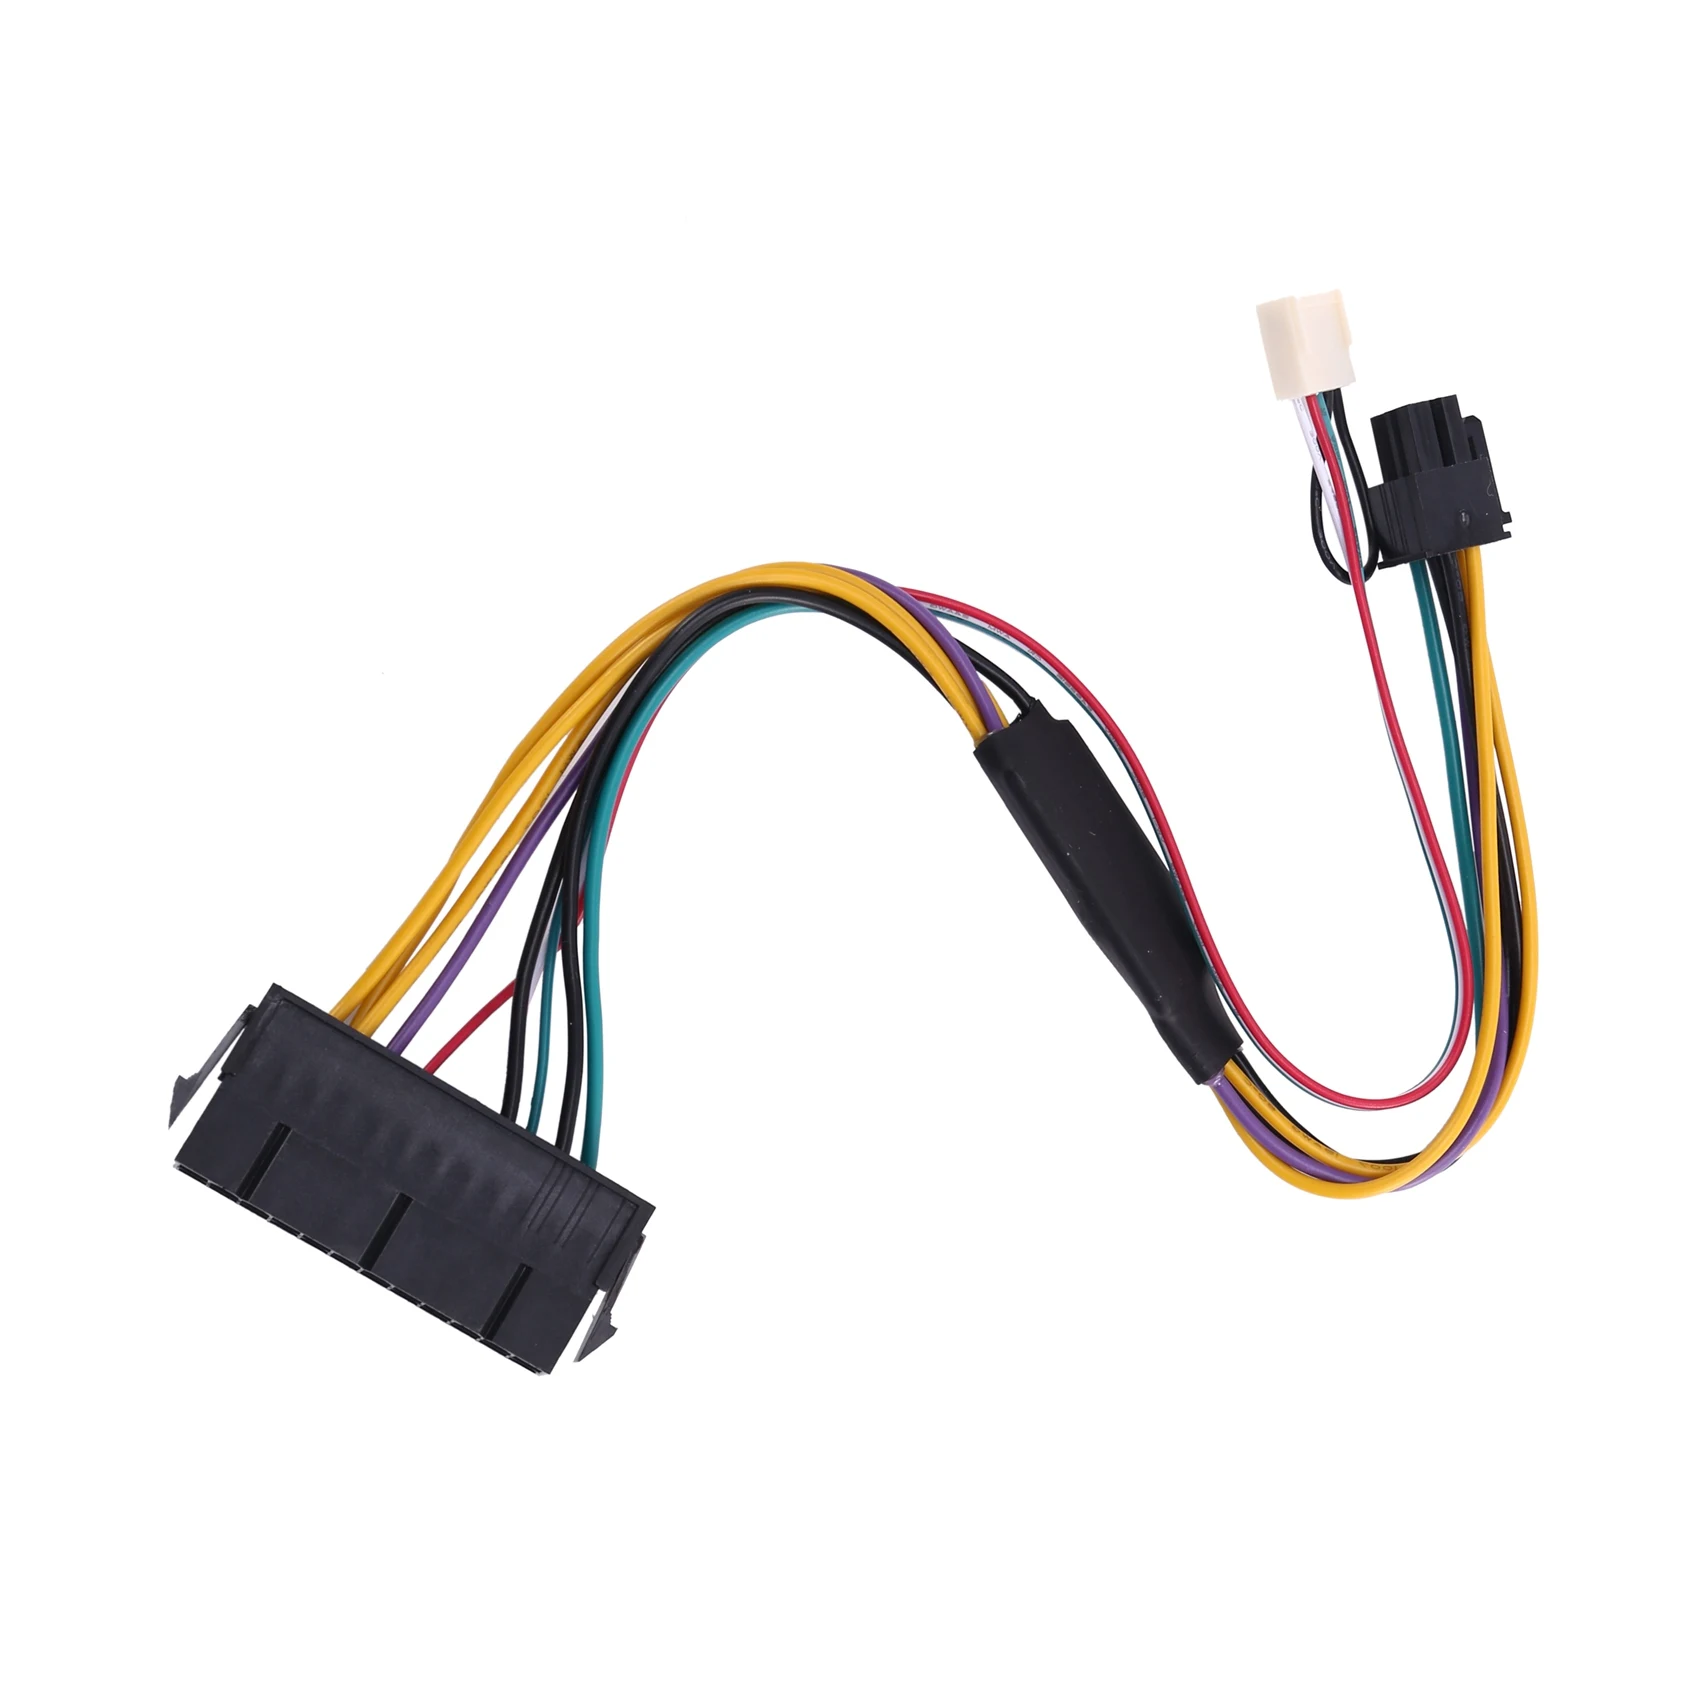 

ATX PSU кабель питания PCIe 6 Pin к ATX 24 Pin кабель питания от 24 P до 6 P для HP 600 G1 600G1 800G1 материнская плата